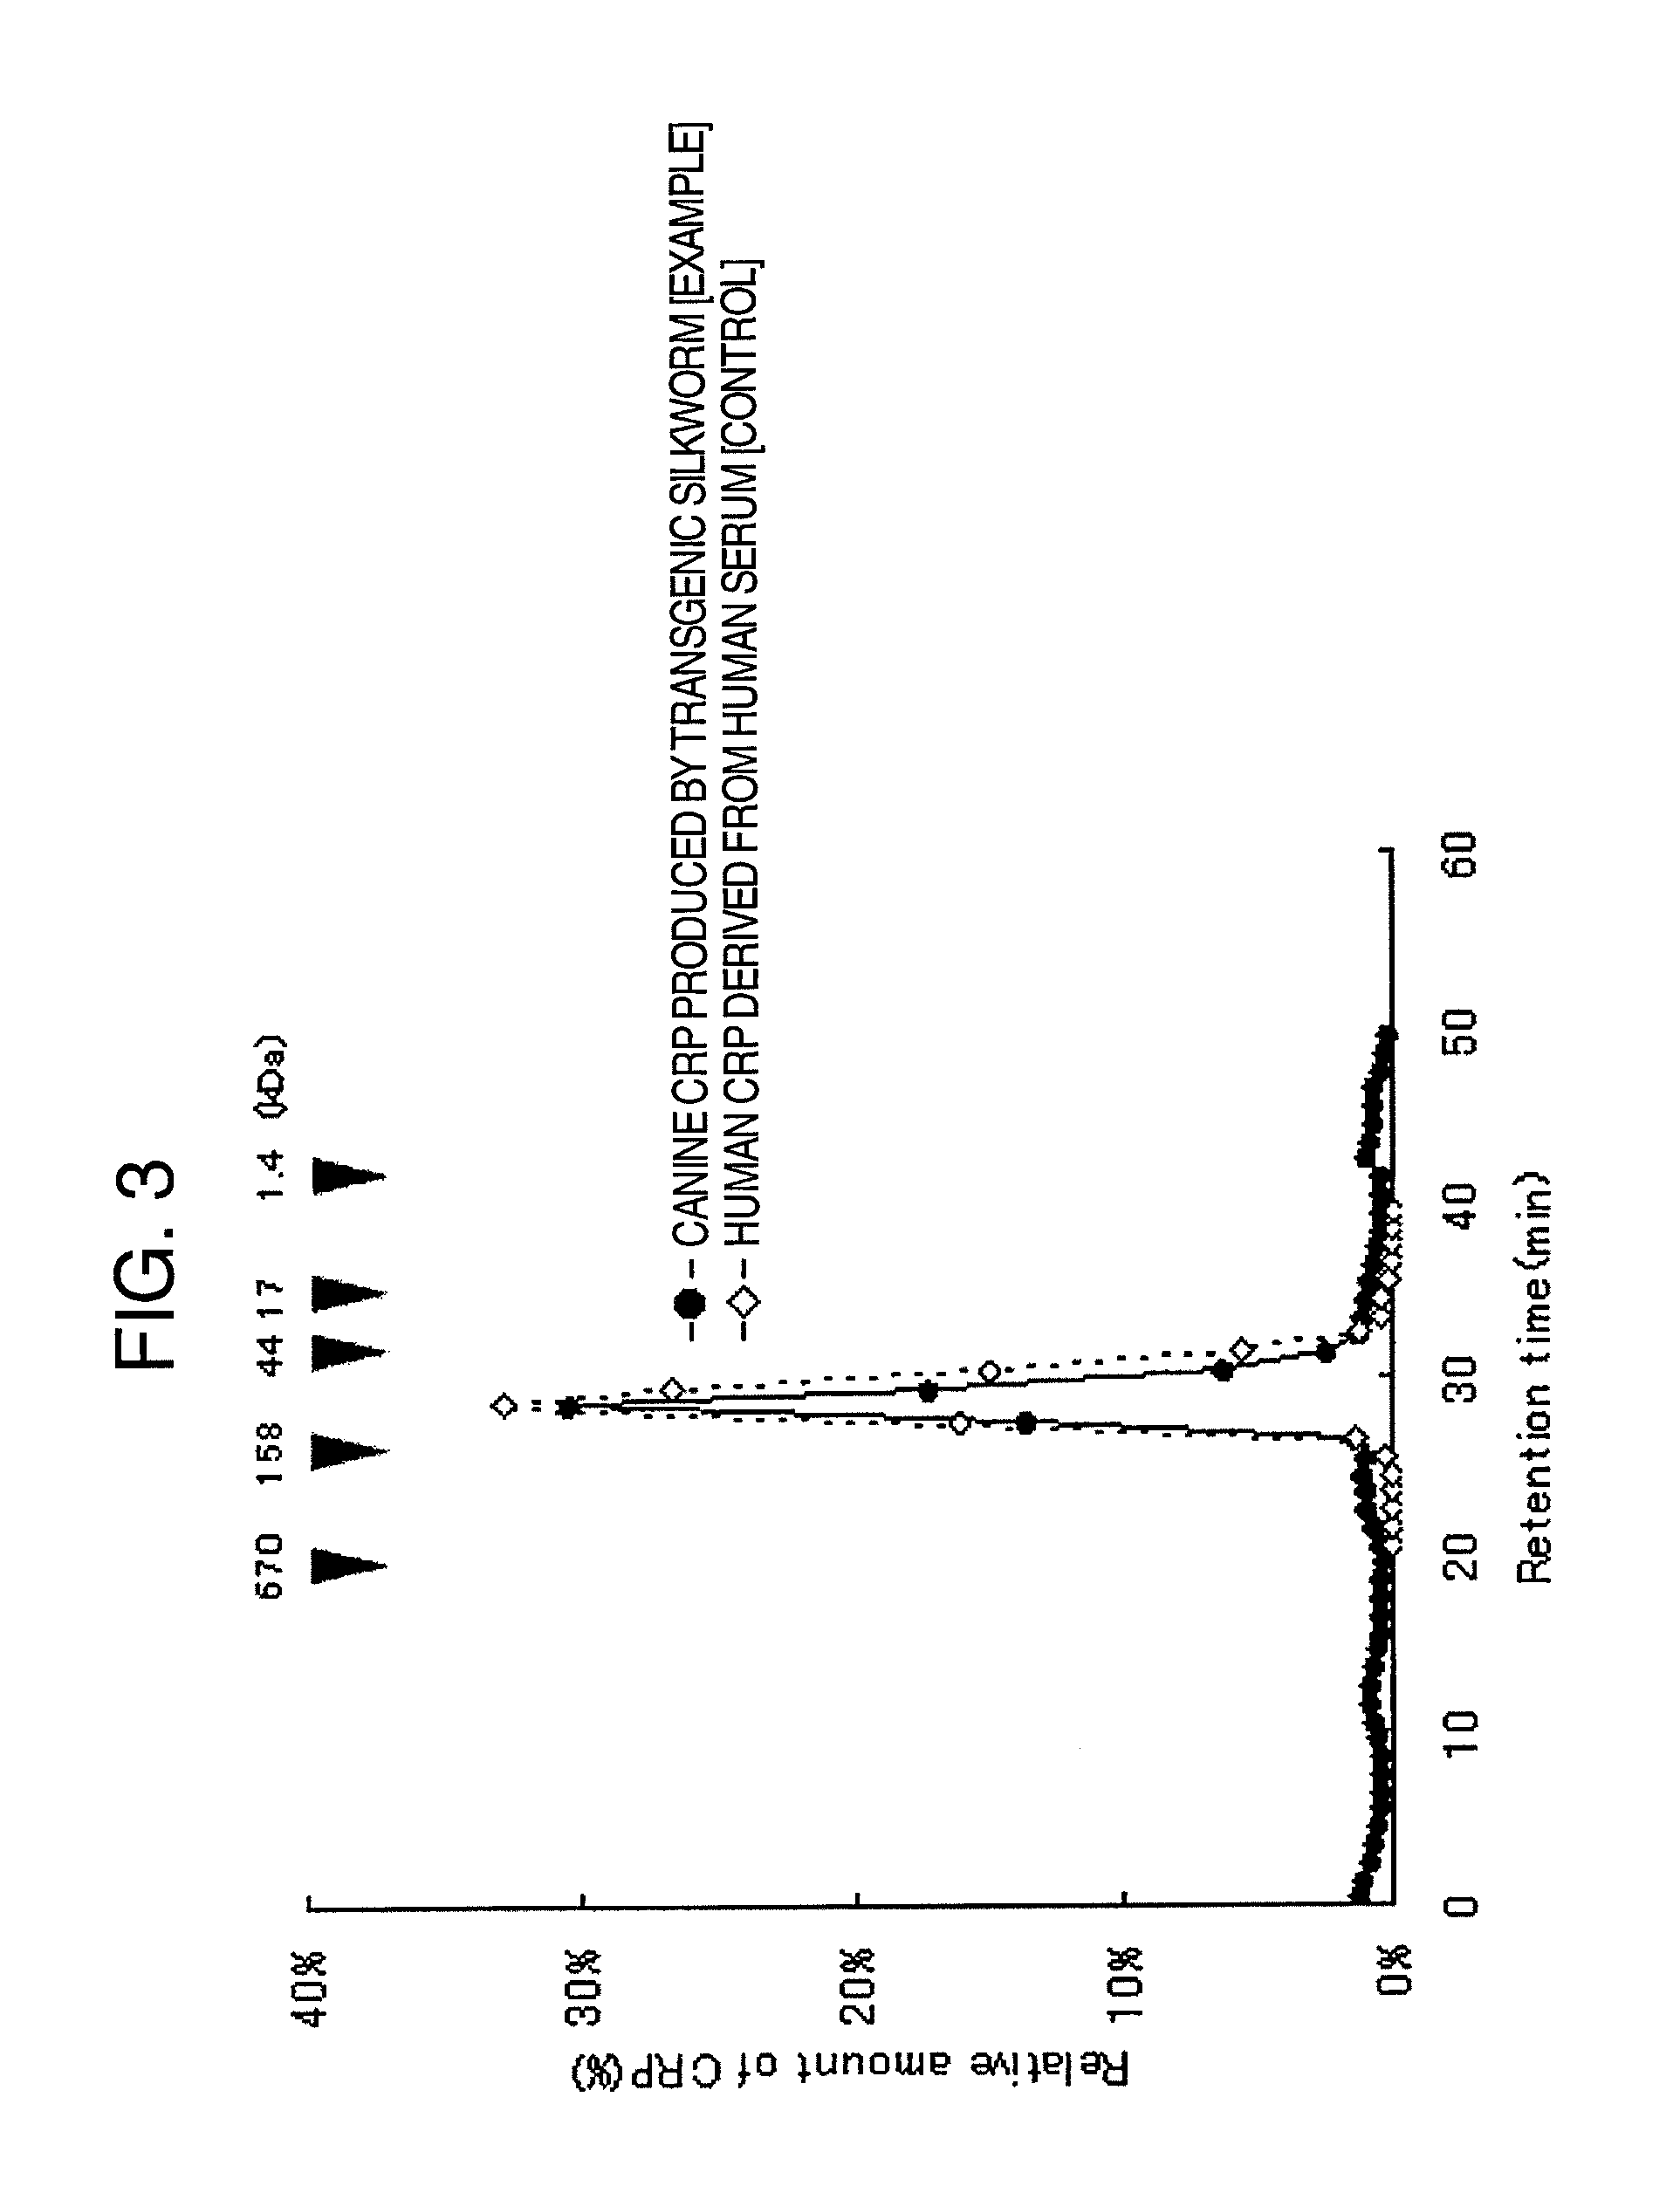 Pentameric CRP-producing transgenic silkworm